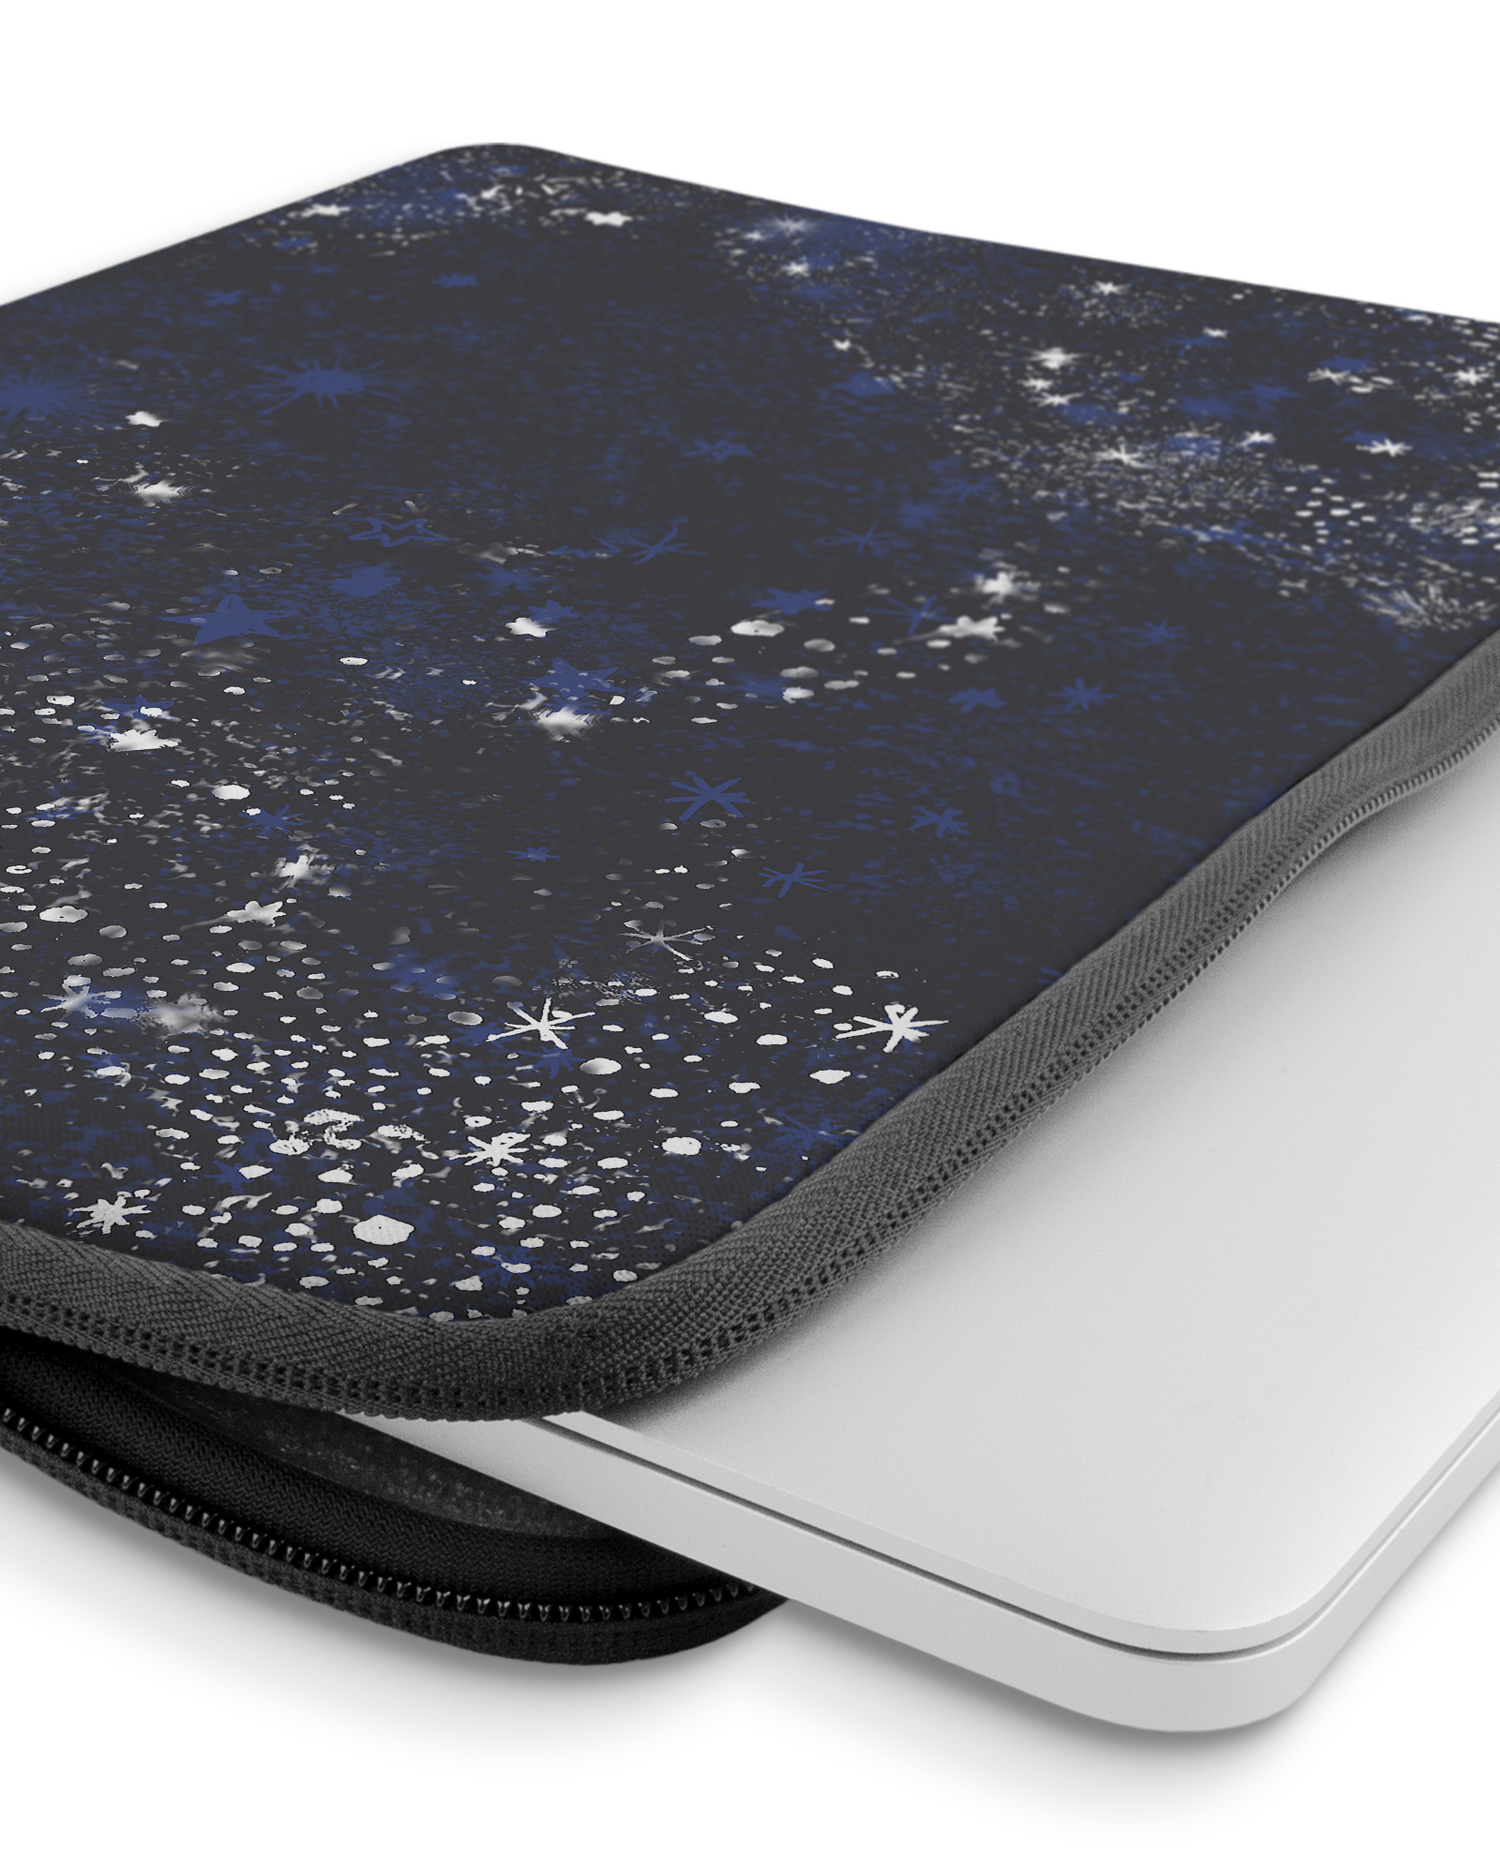 Starry Night Sky Laptop Case 14 inch with device inside